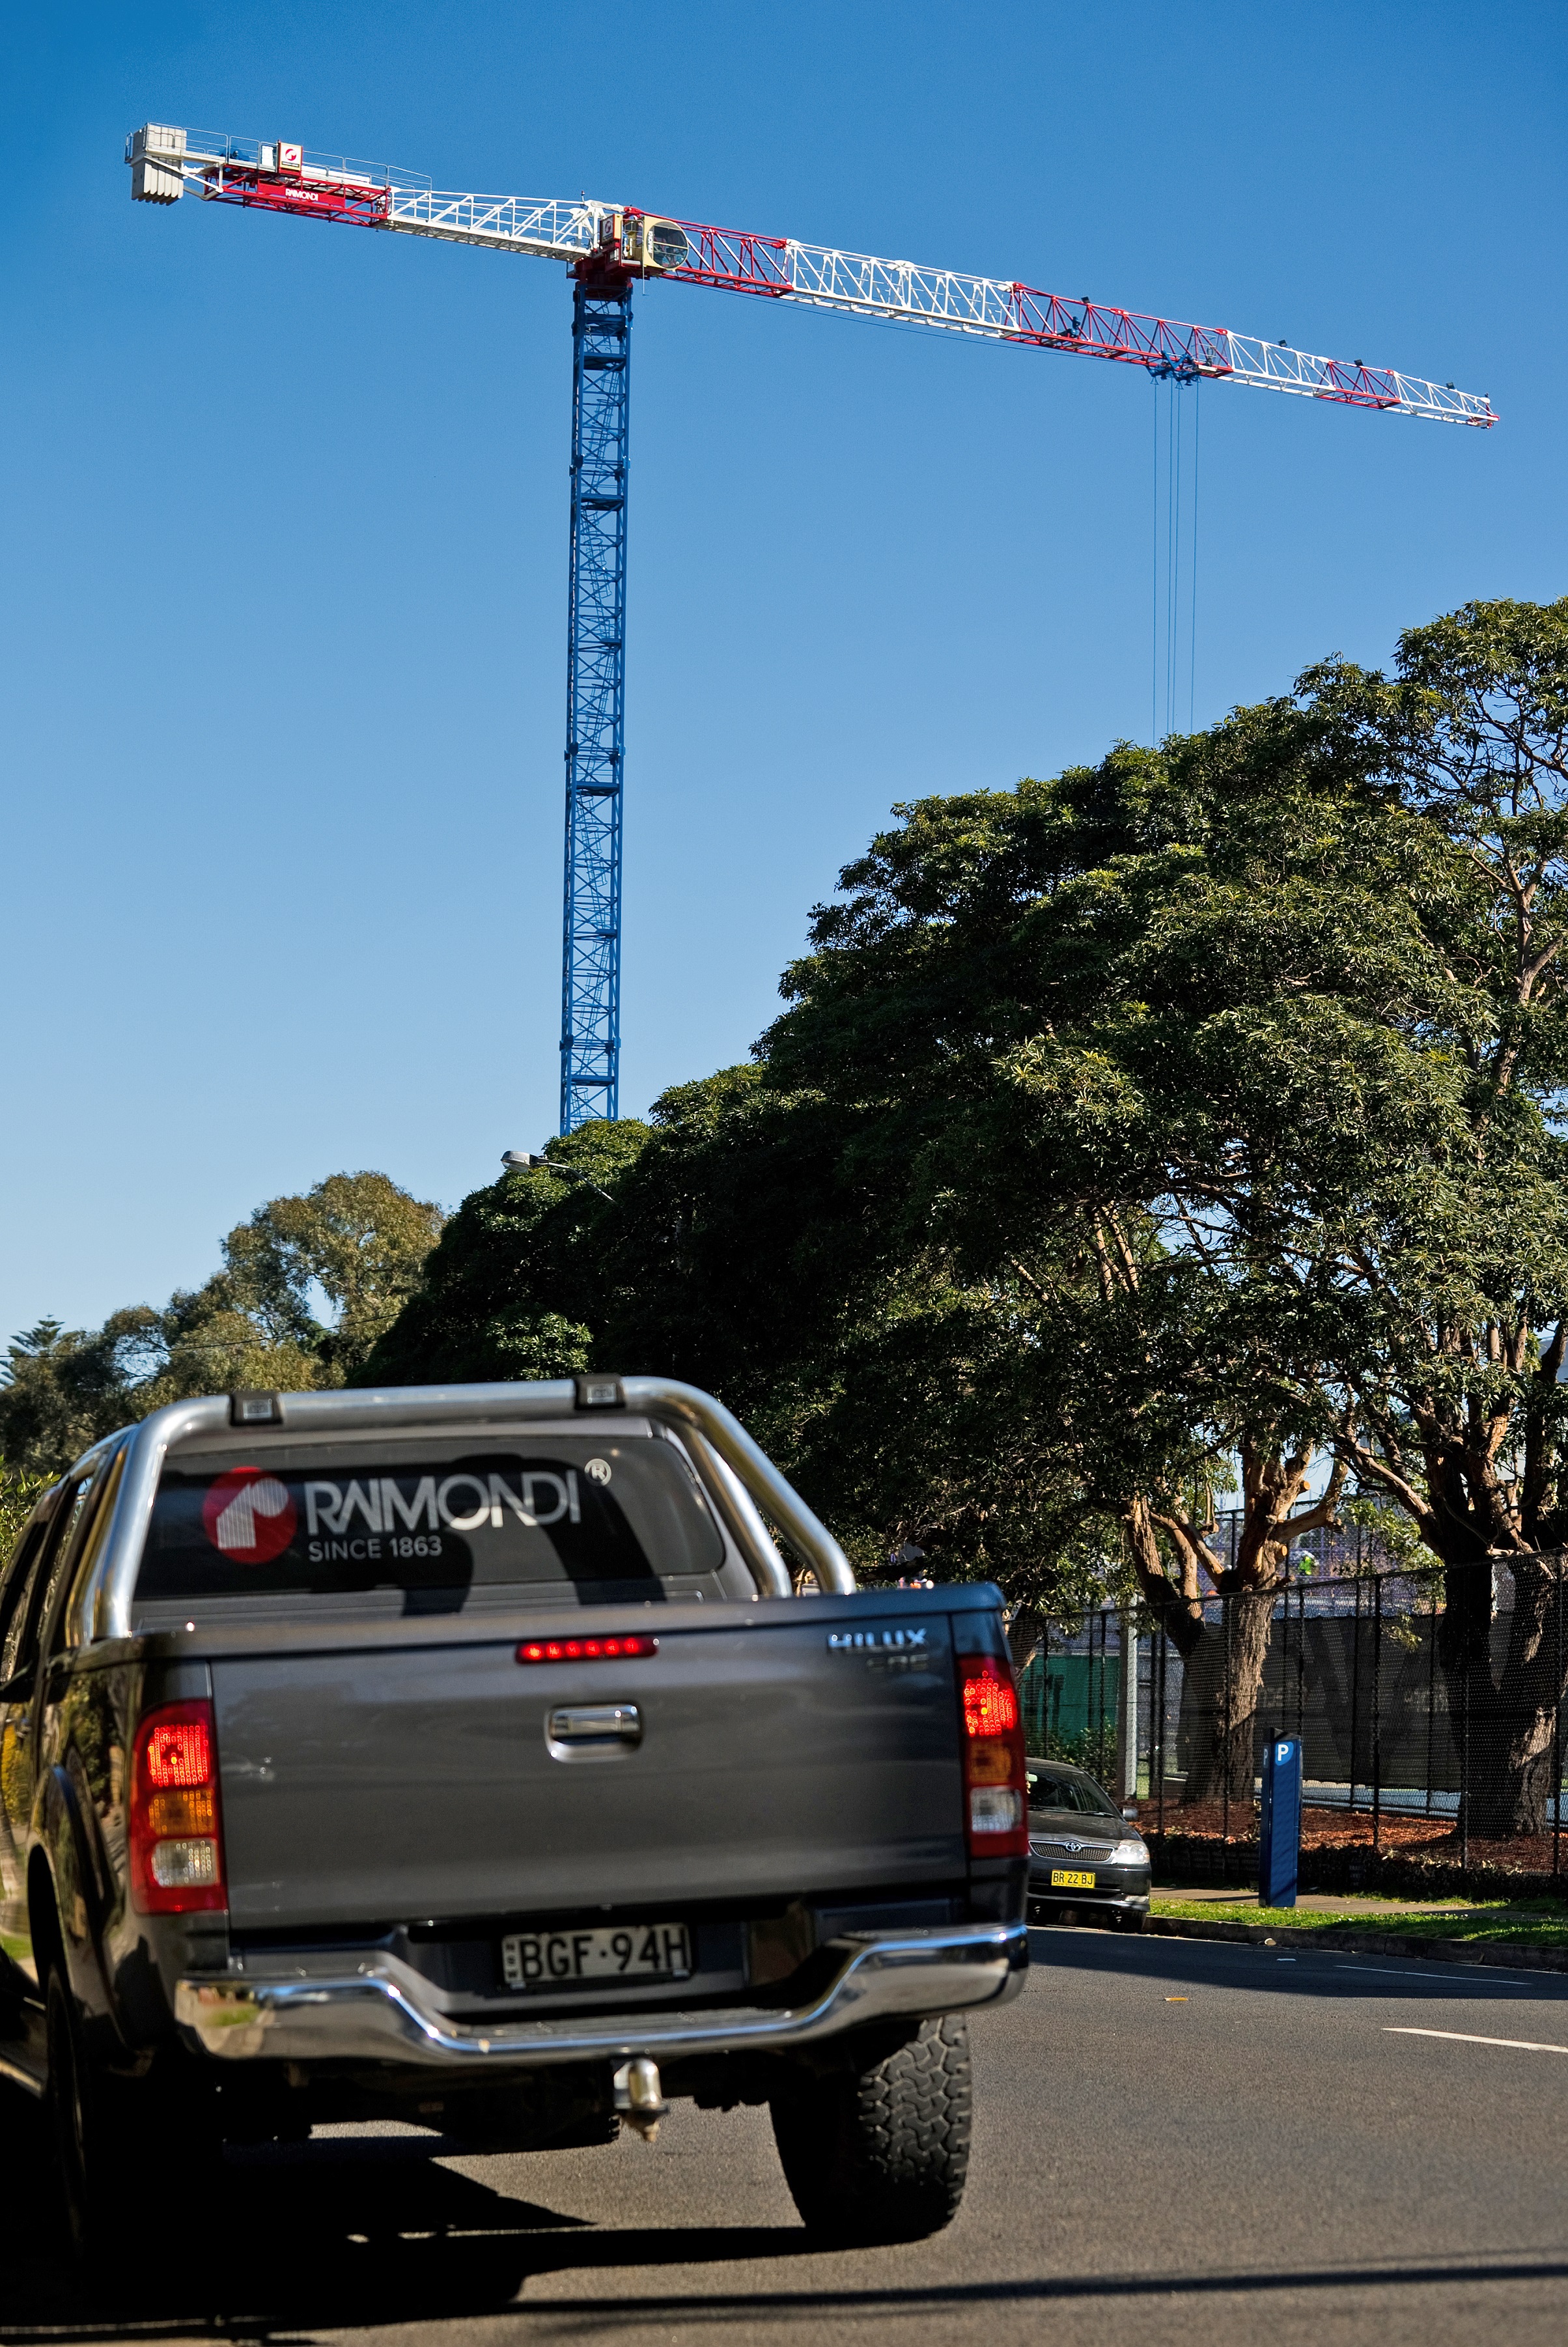 Raimondi MRT84 maximum capacity 5 tonne, 1.37 tonne at 42 meter jib tip, 41 meter HUH erected at Parramatta Road, Burwood, New South Wales, Australia 